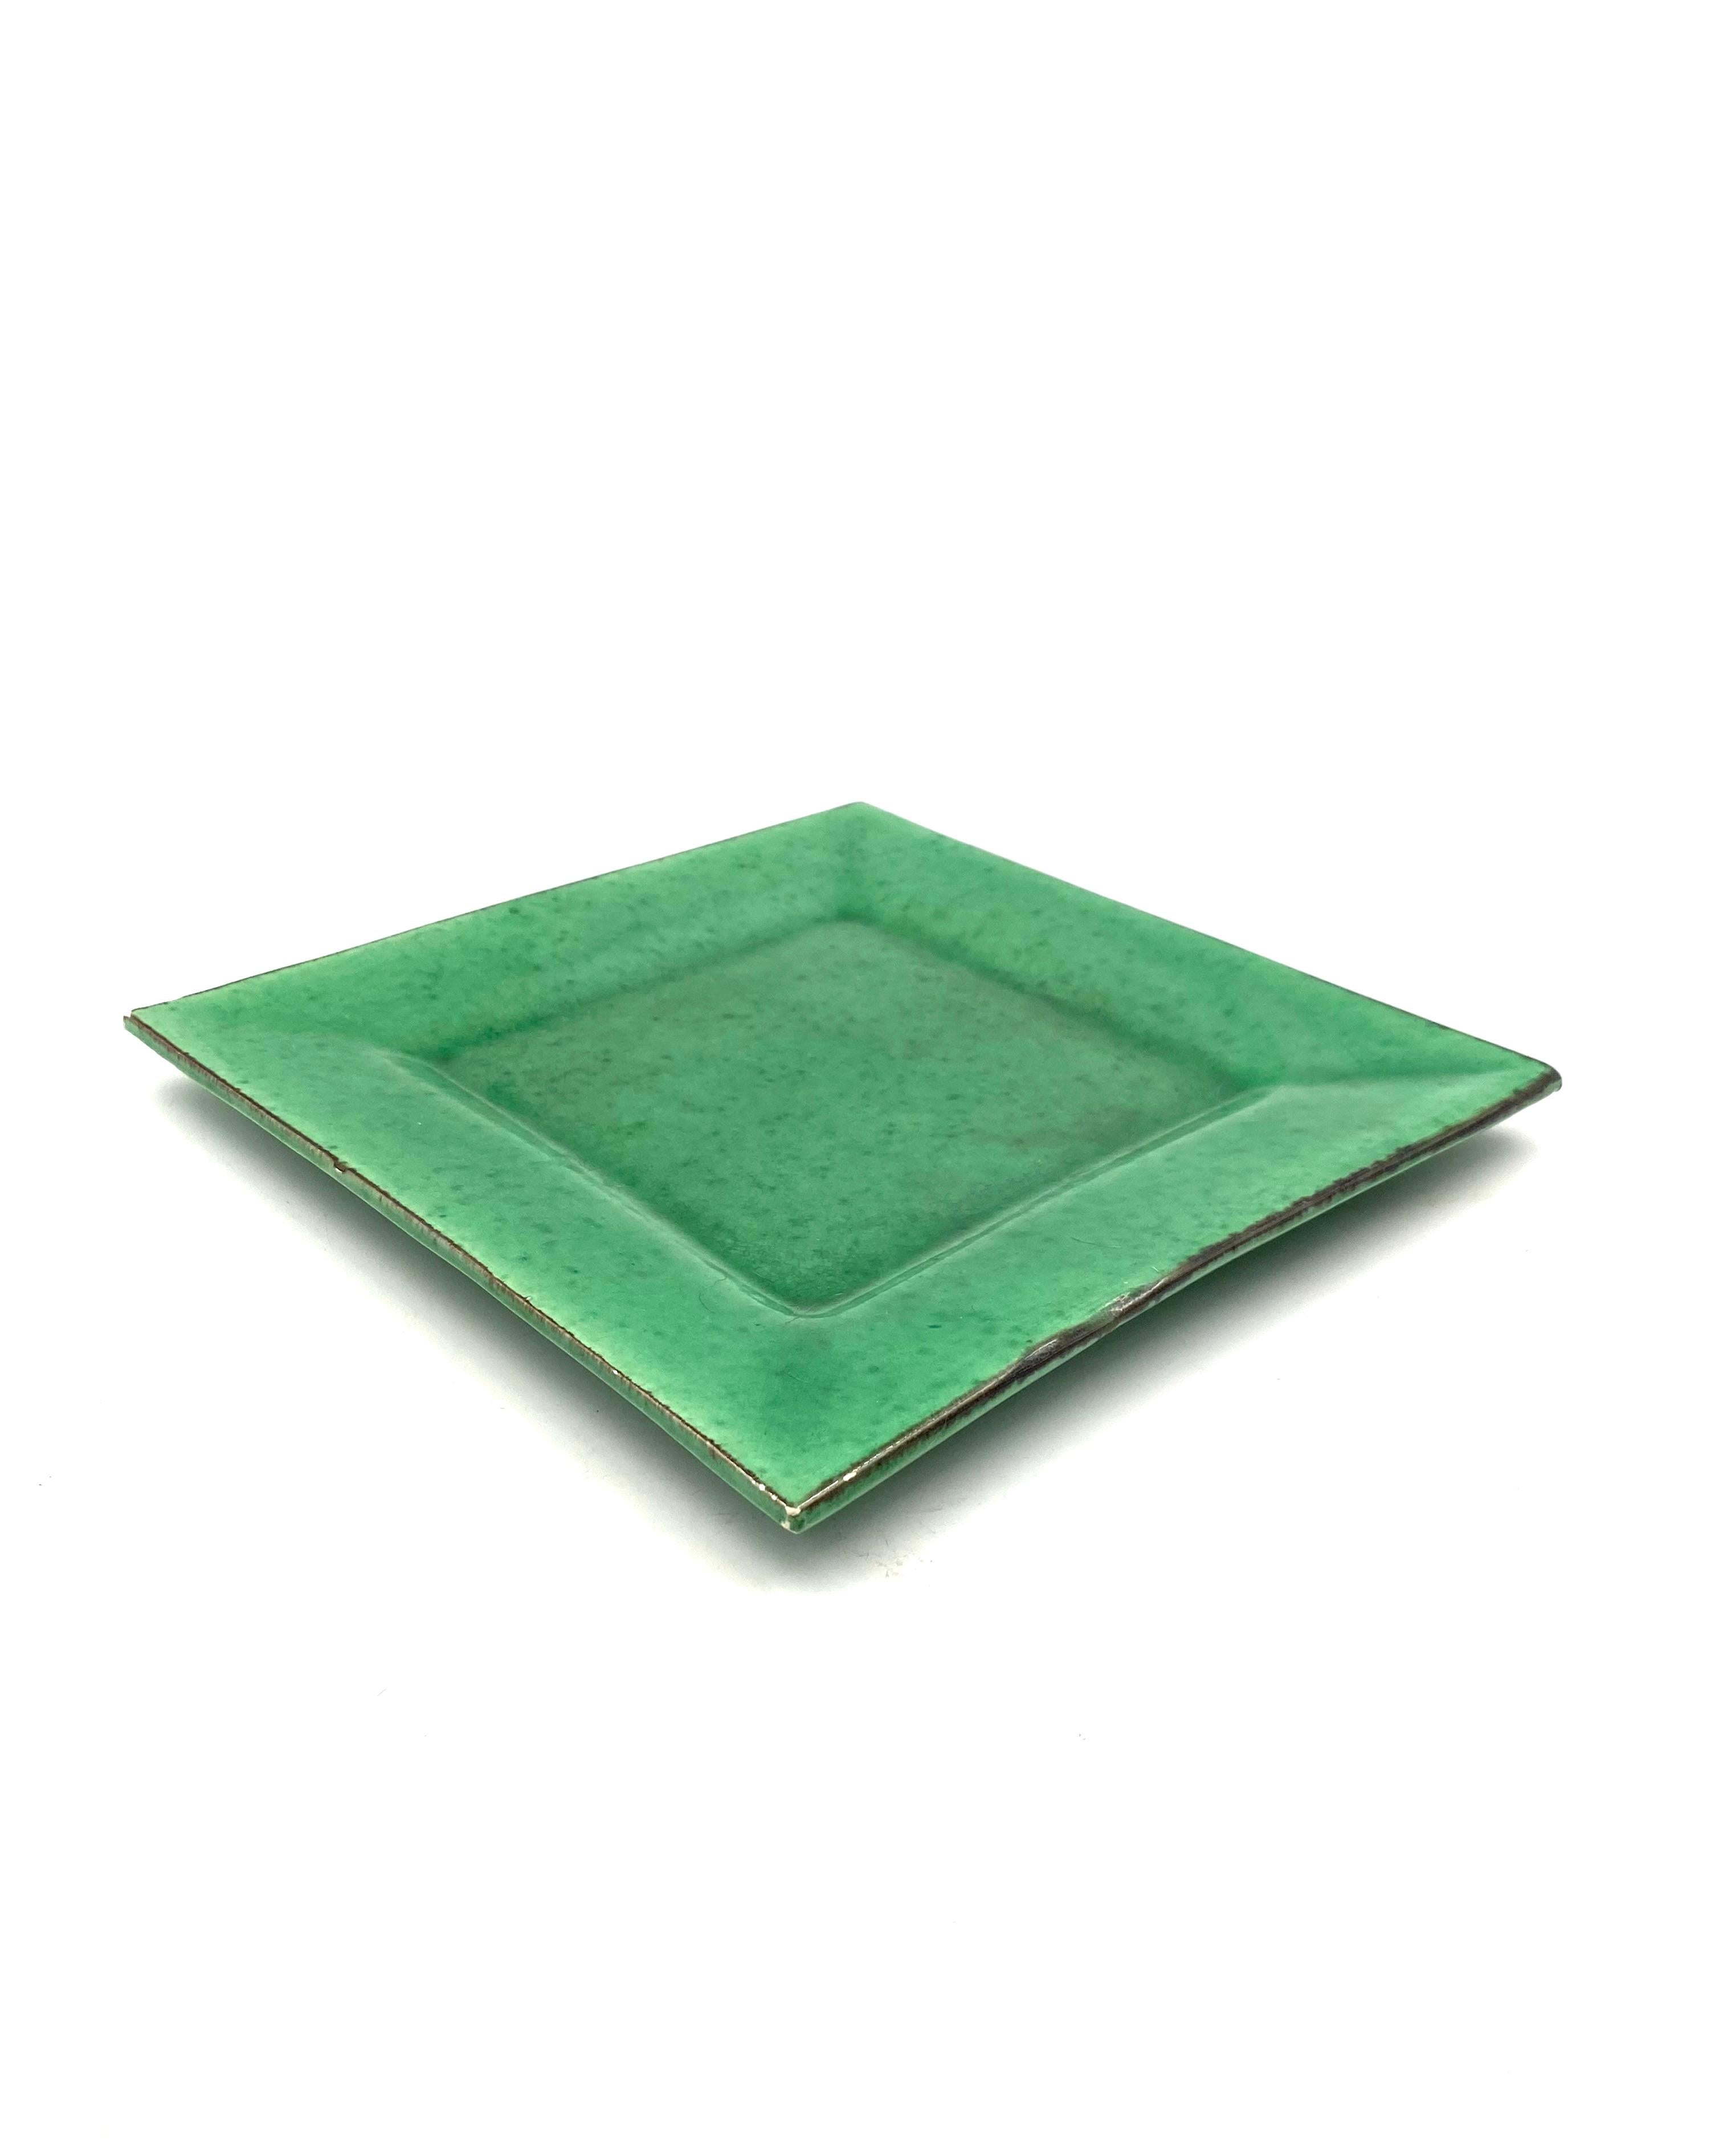 Green Fire-Glazed ceramic vide poche, France, ca. 1960 For Sale 9